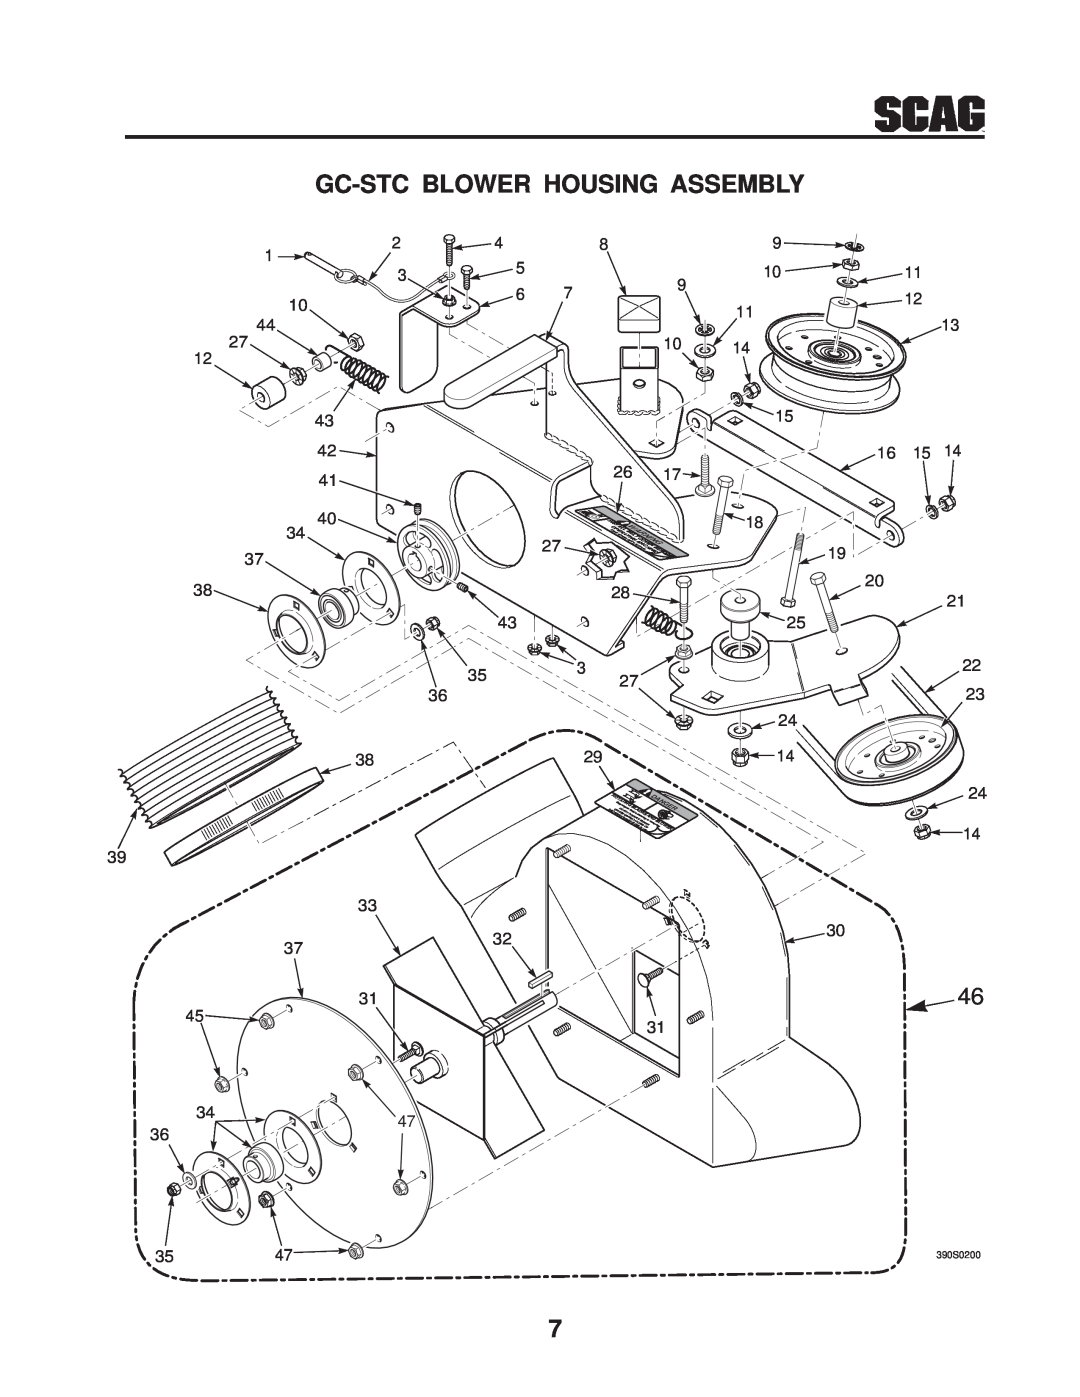 Scag Power Equipment GC-STC manual Gc-Stc Blower Housing Assembly, 390S0200, Dan Ger 